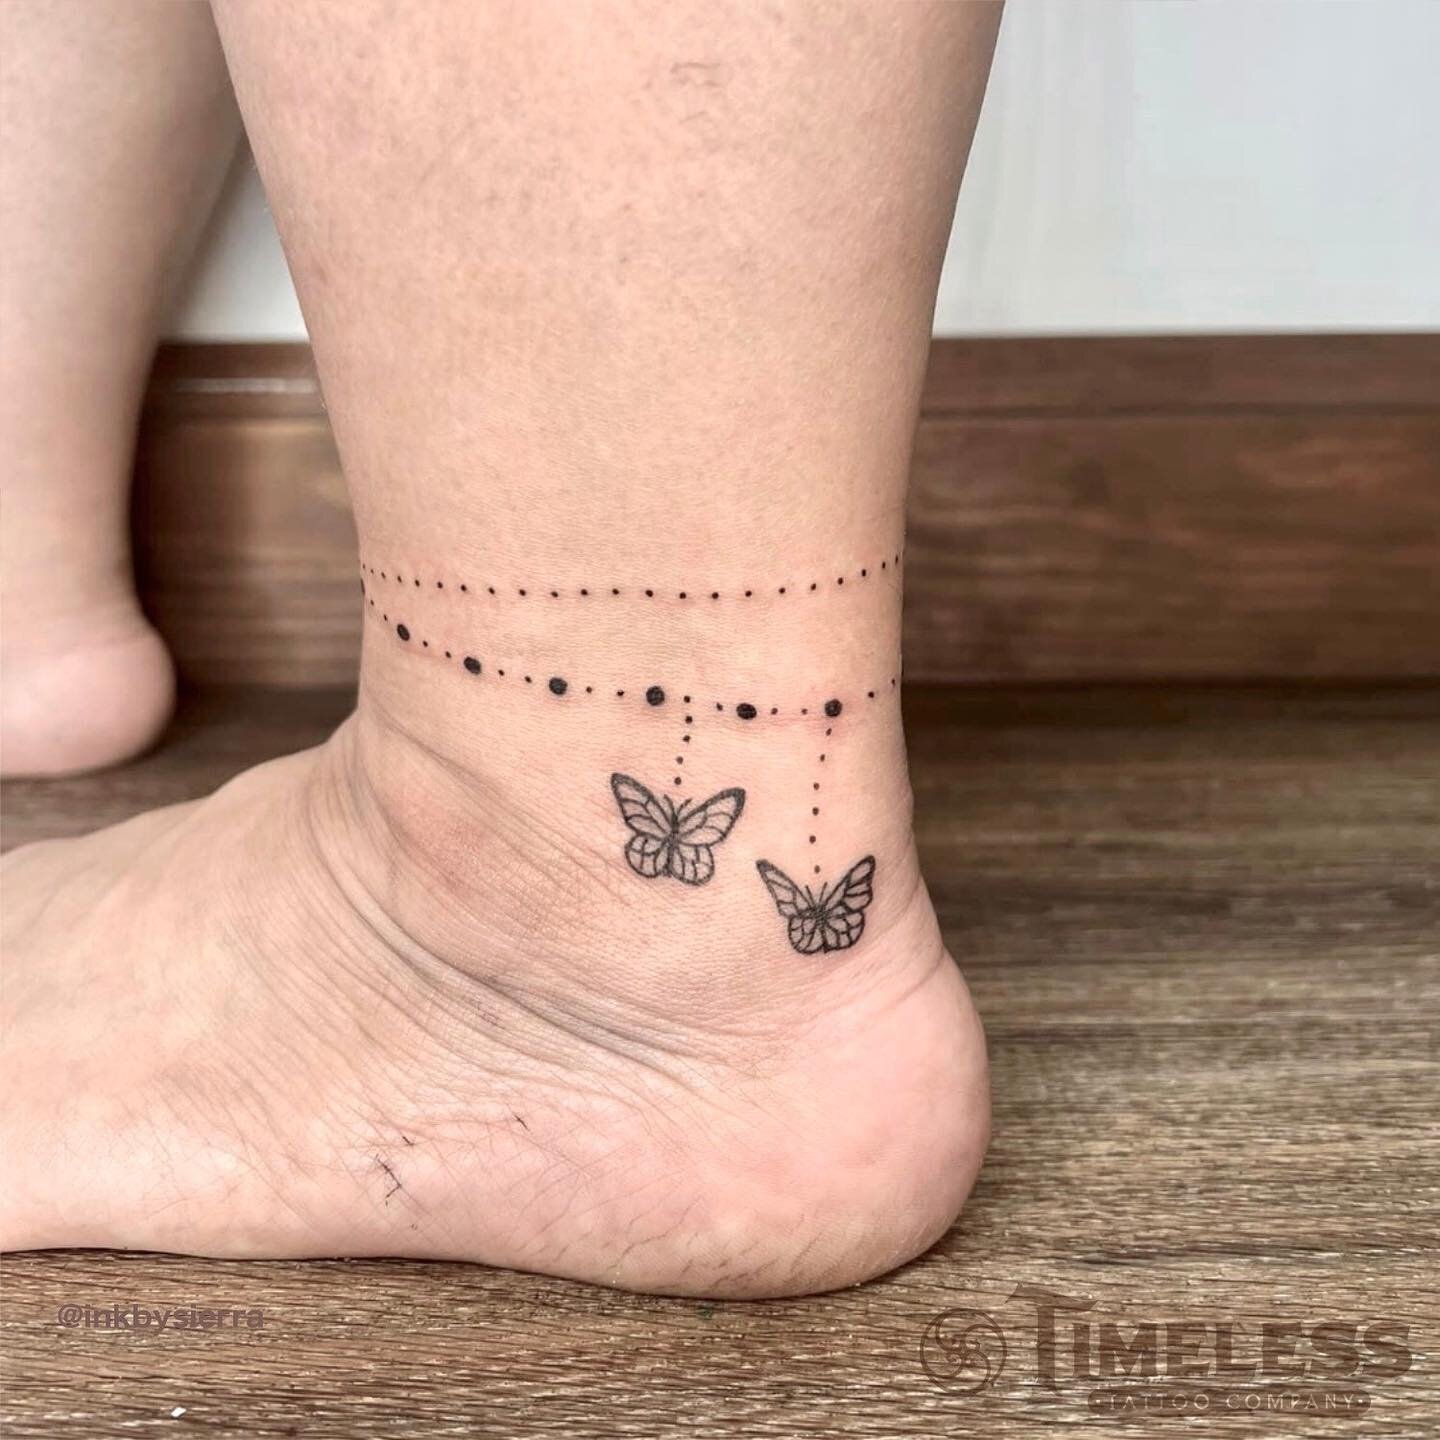 A Dainty Anklet Tattoo for My Mom 💕⁠
⁠
#butterflytattoo #anklettattoo #lineworktattoo #dotworktattoo #artistsoninstagram #torontotattoo #timelesstattoocompany